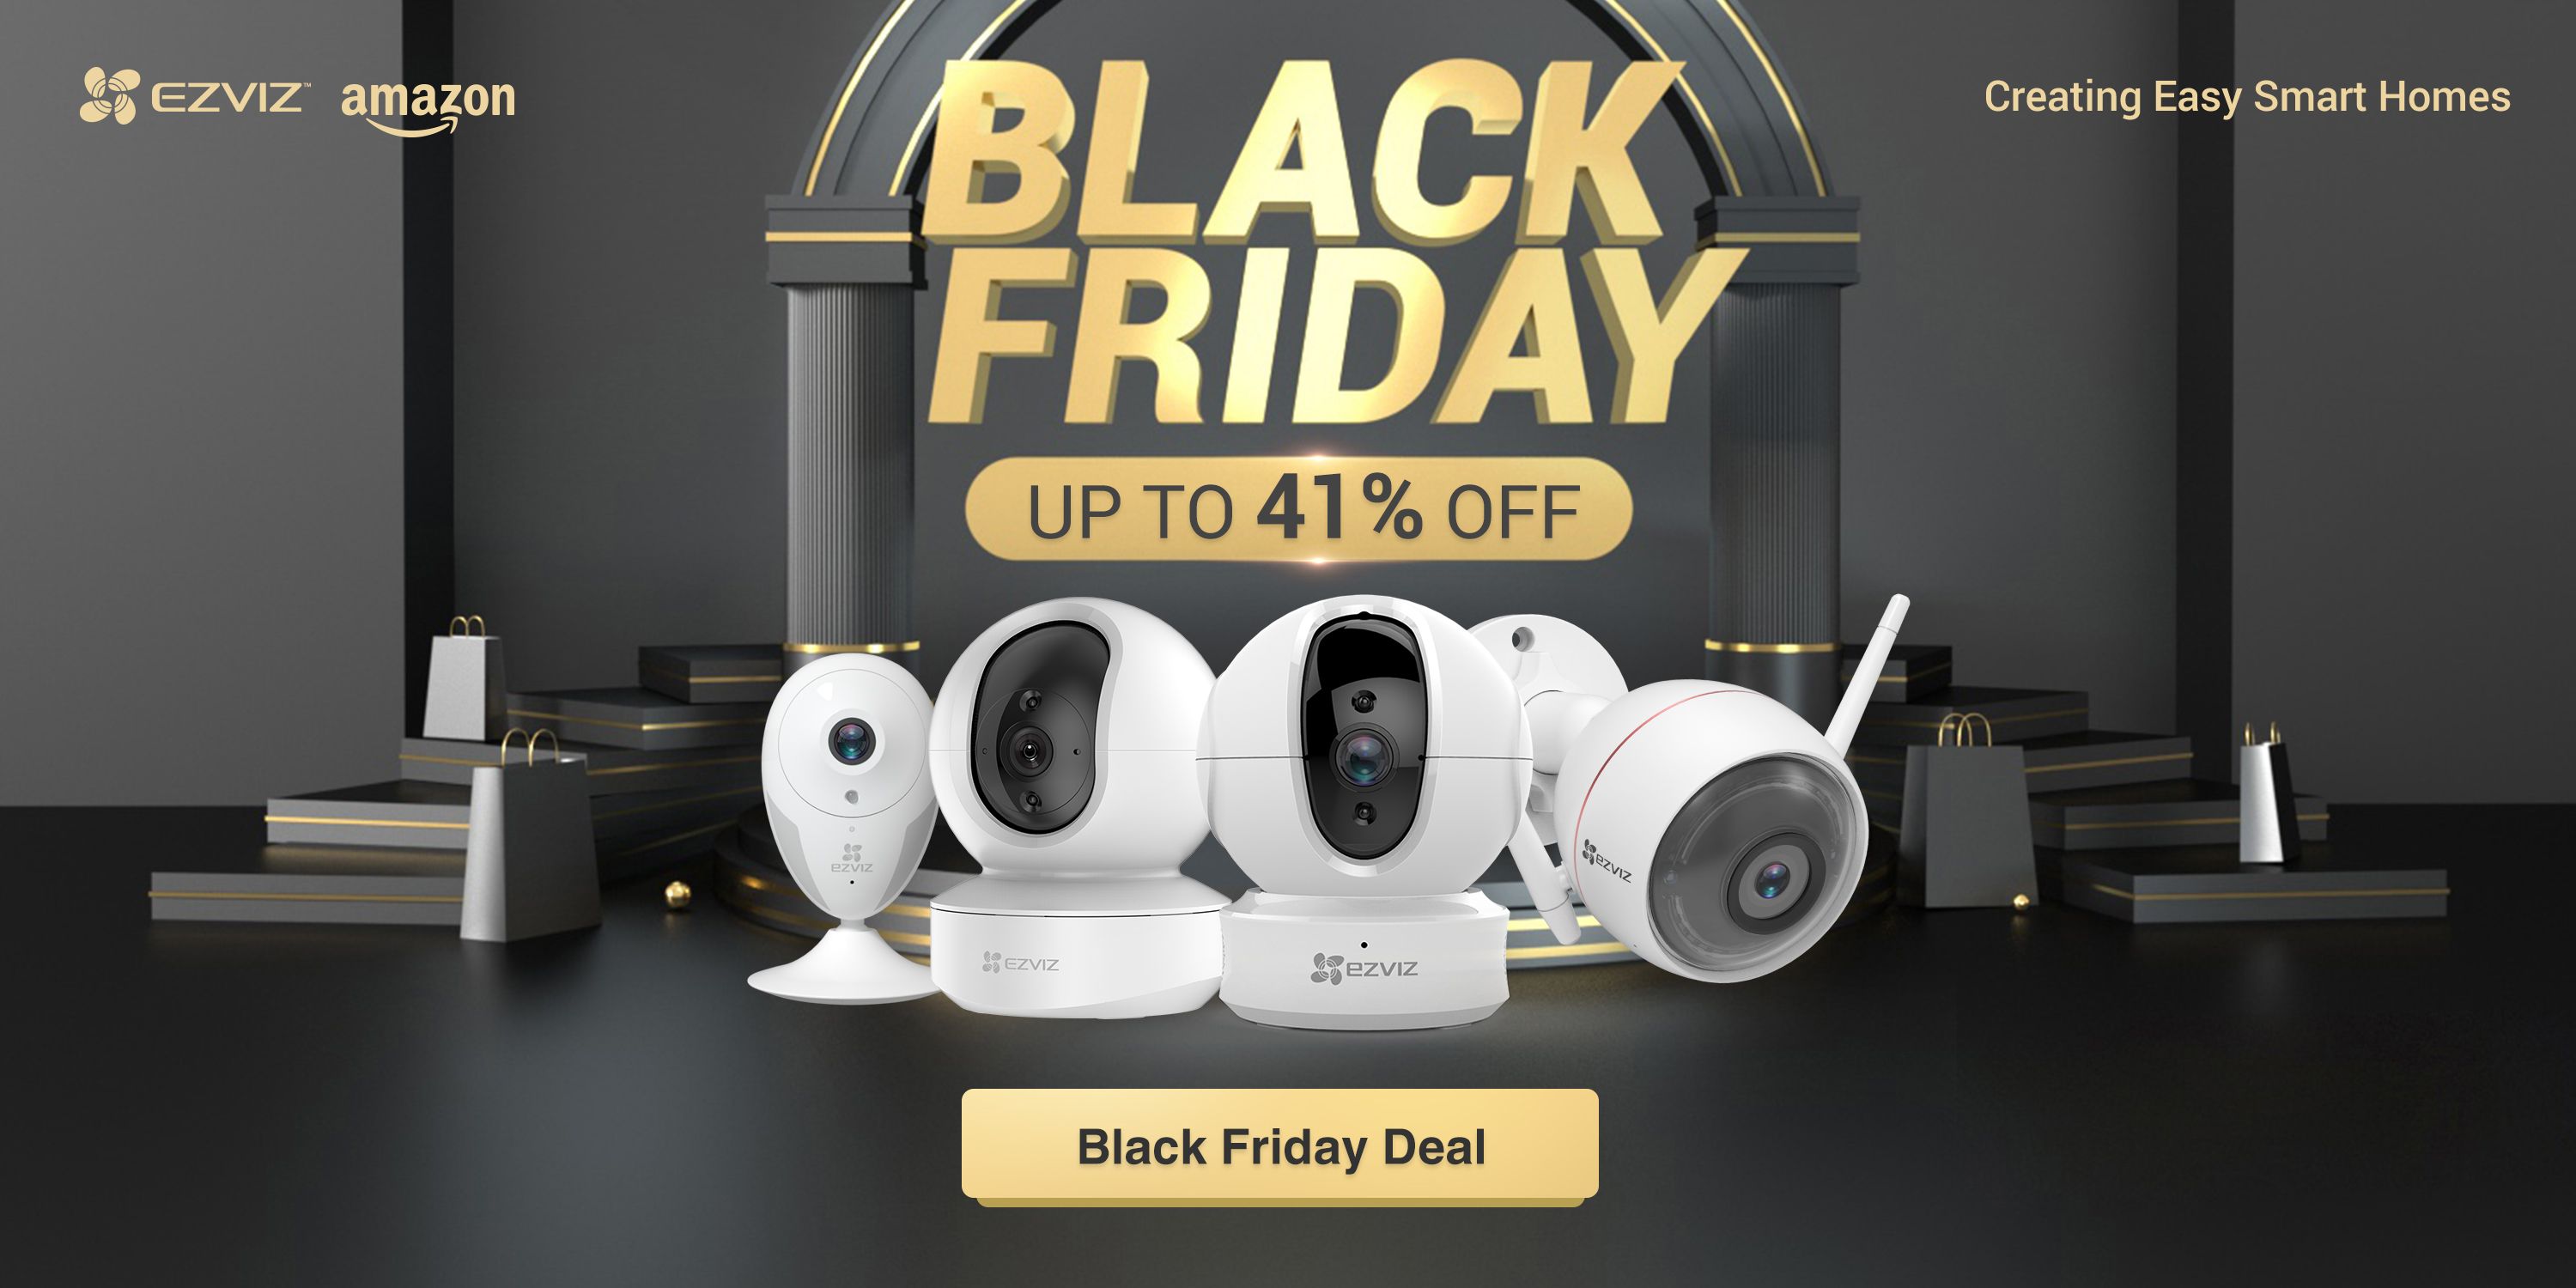 EZVIZ has amazing deals on smart home tech this Black Friday photo 9